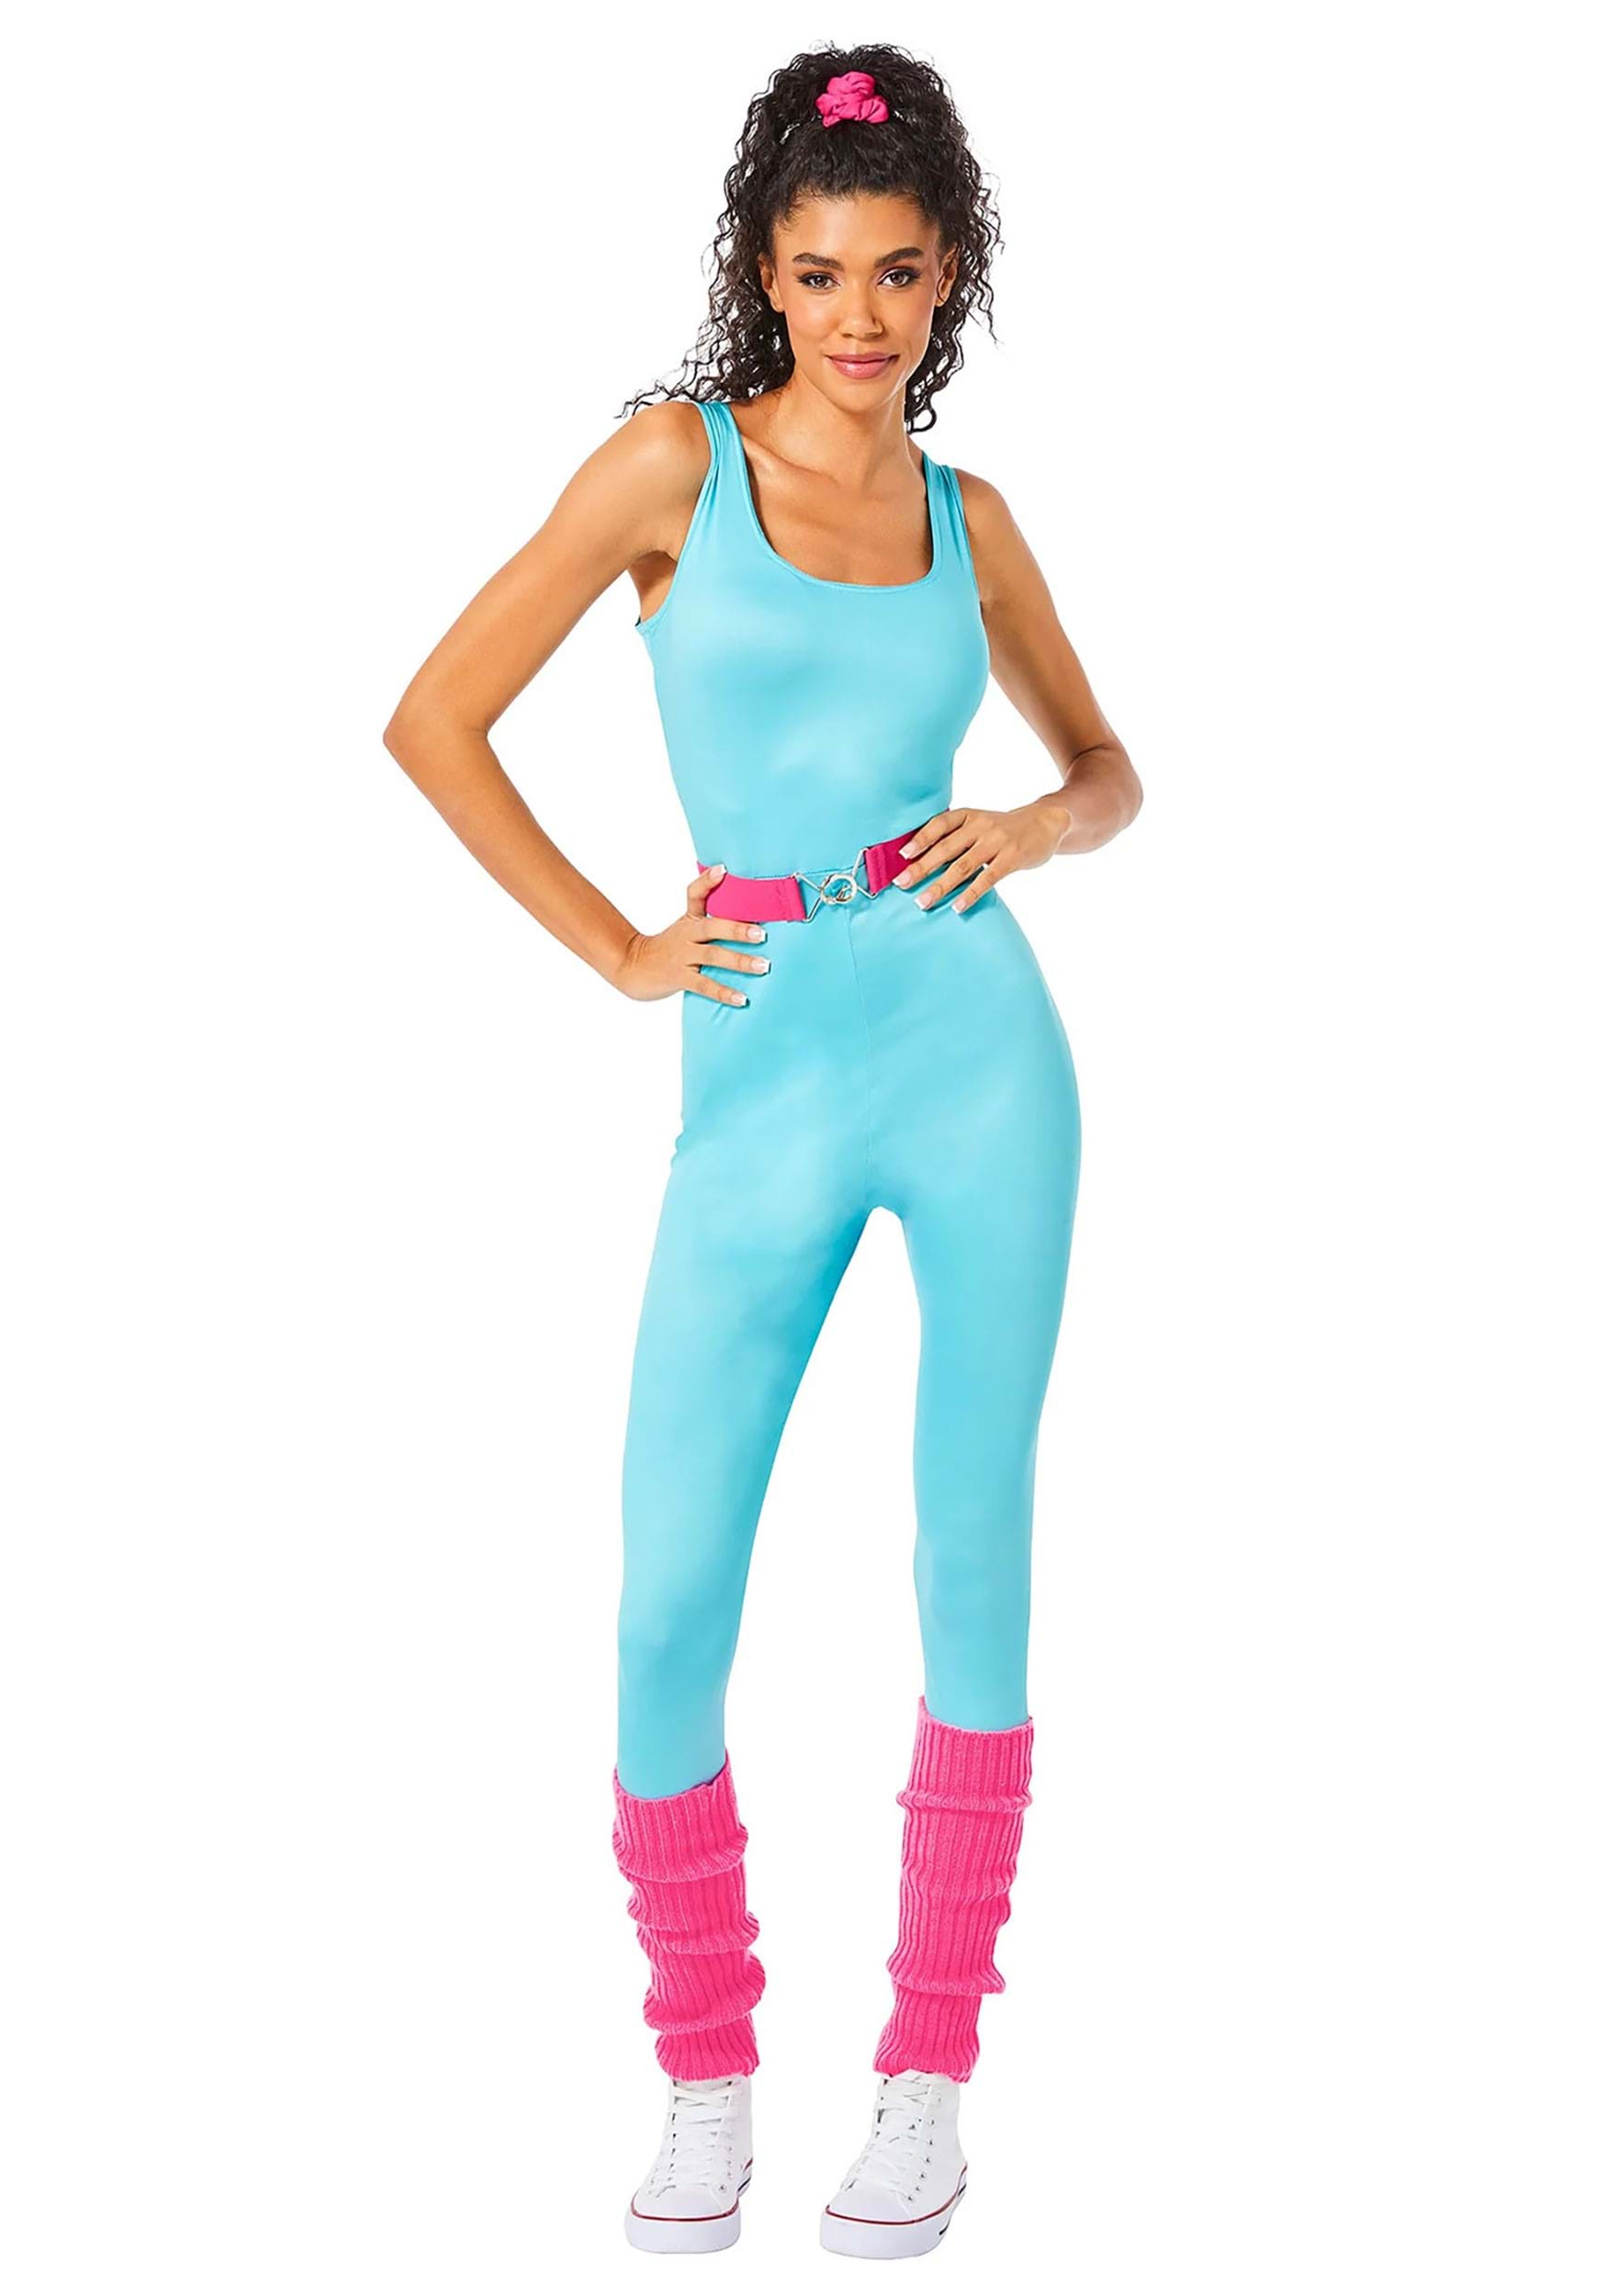 https://images.halloweencostumes.com/products/91760/1-1/womens-classic-aerobic-barbie-costume.jpg